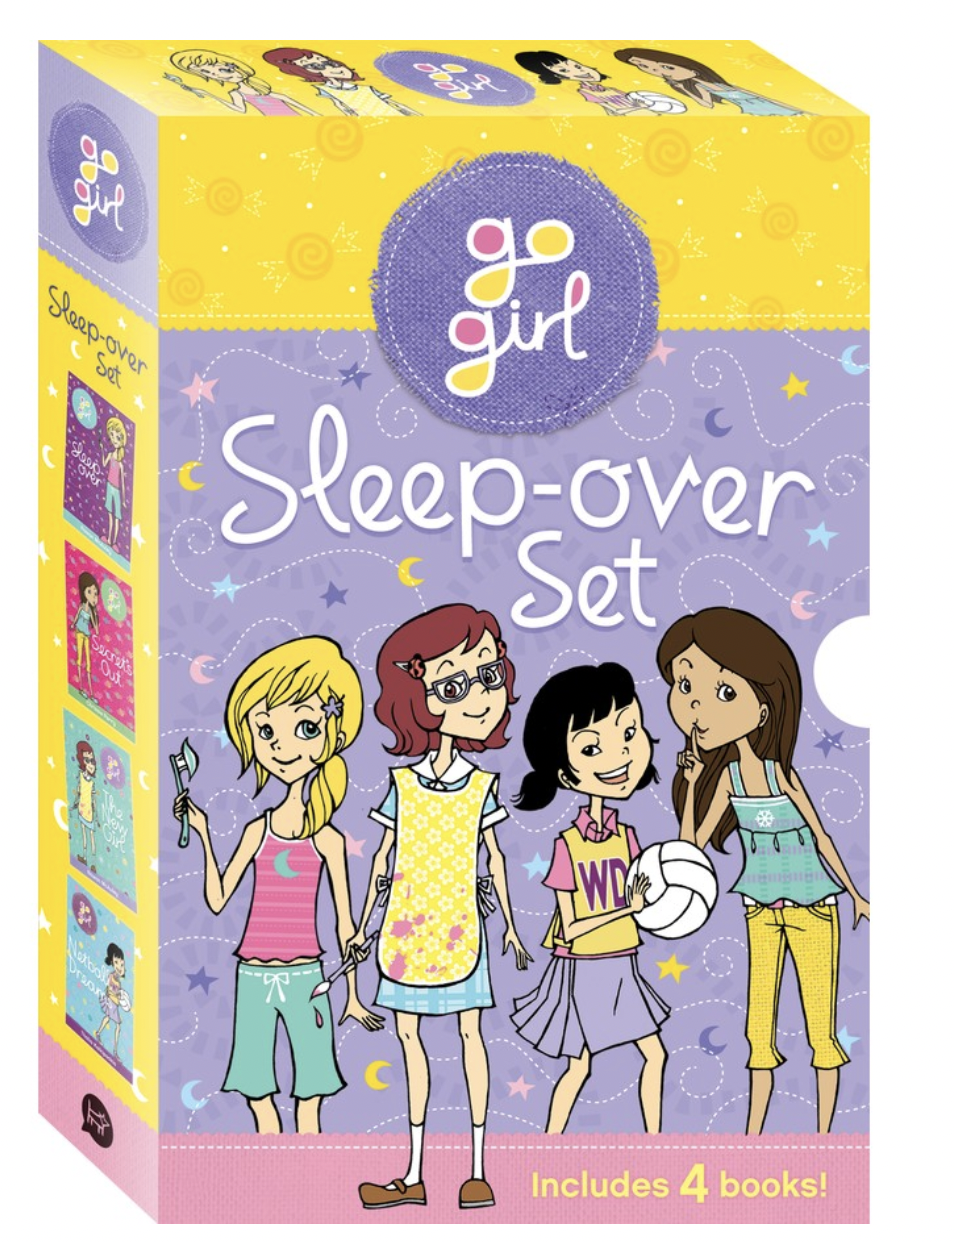 Go Girl! Sleepover Set by Thalia Kalkipsakis, Rowan McAuley & Chrissie Perry